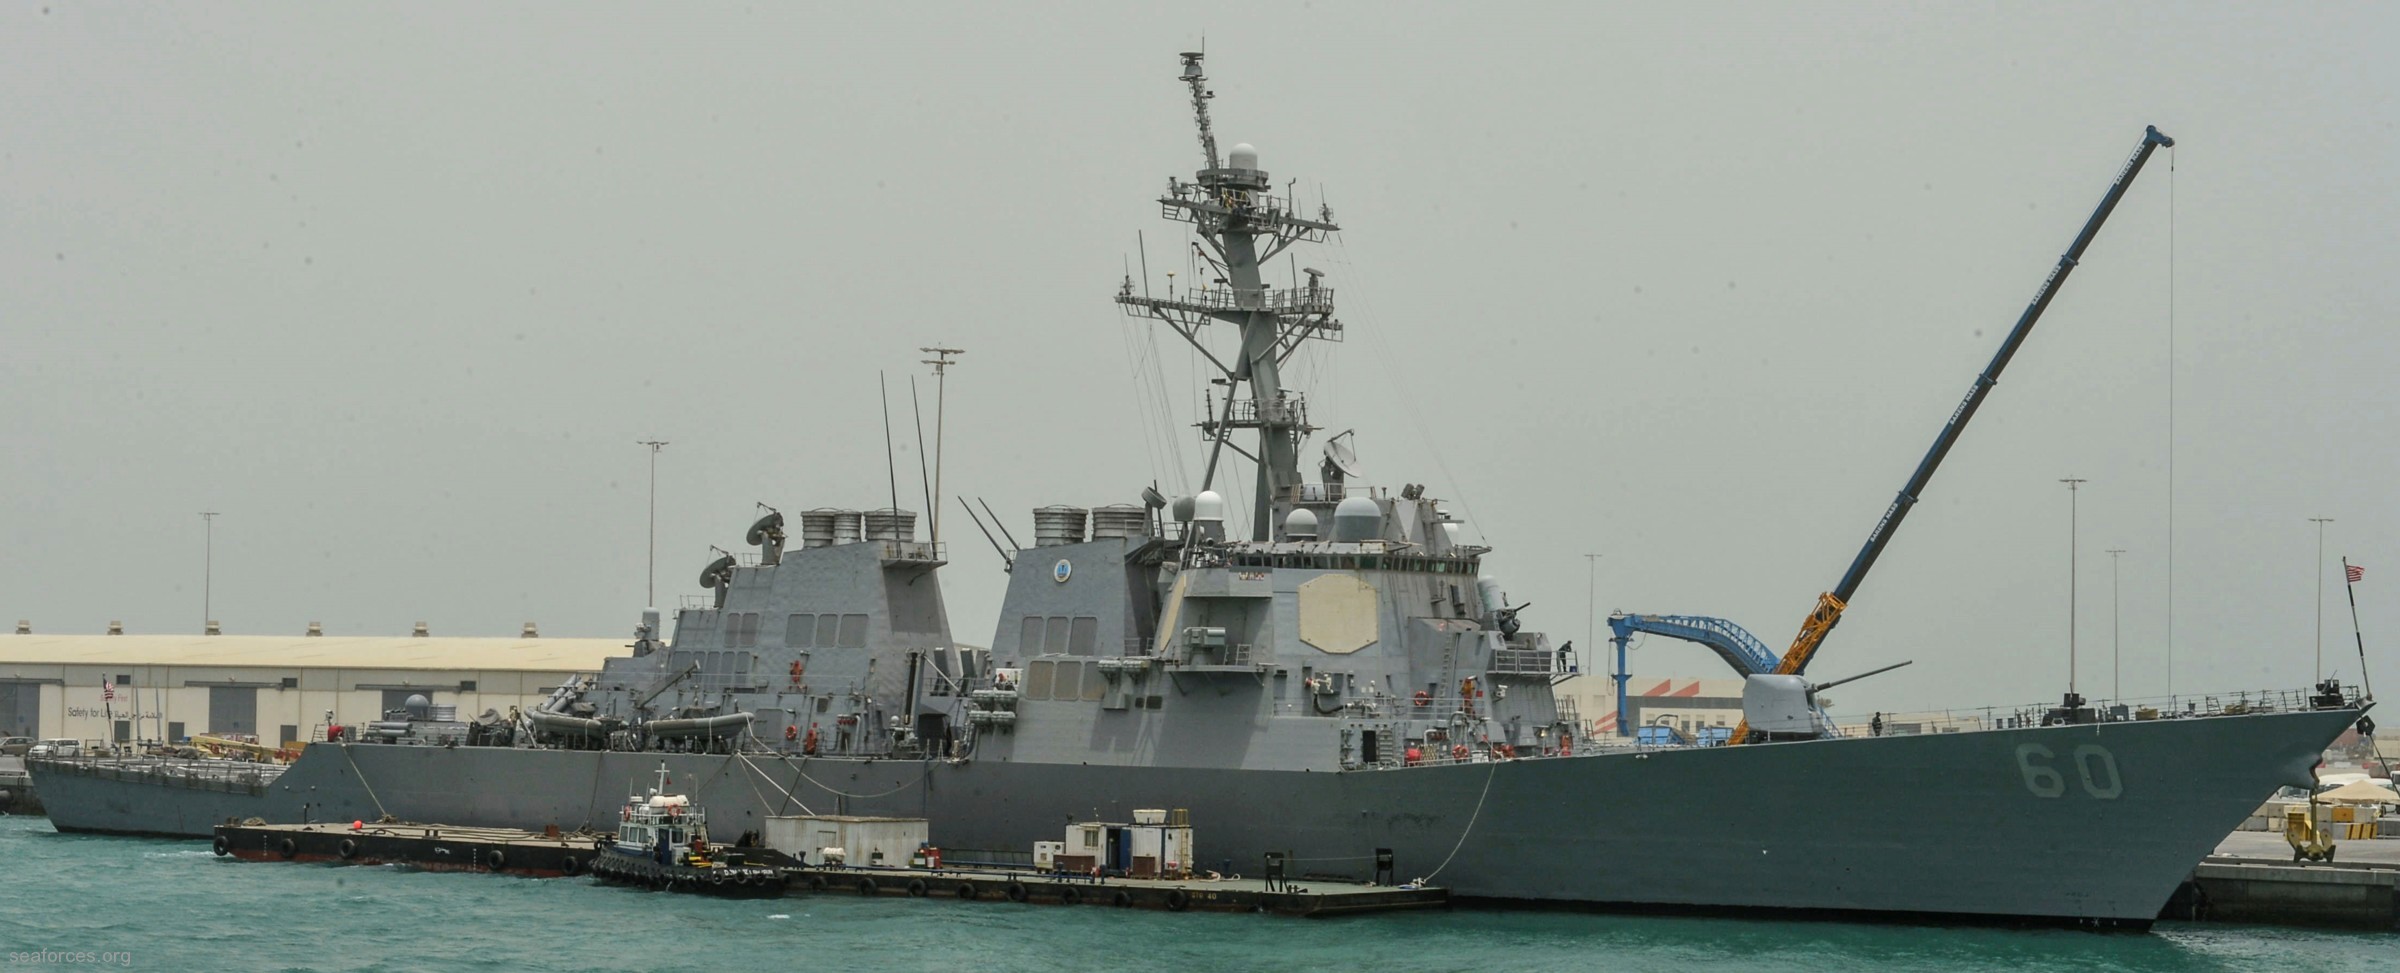 ddg-60 uss paul hamilton guided missile destroyer us navy 08 khalifa bin salman pier bahrain